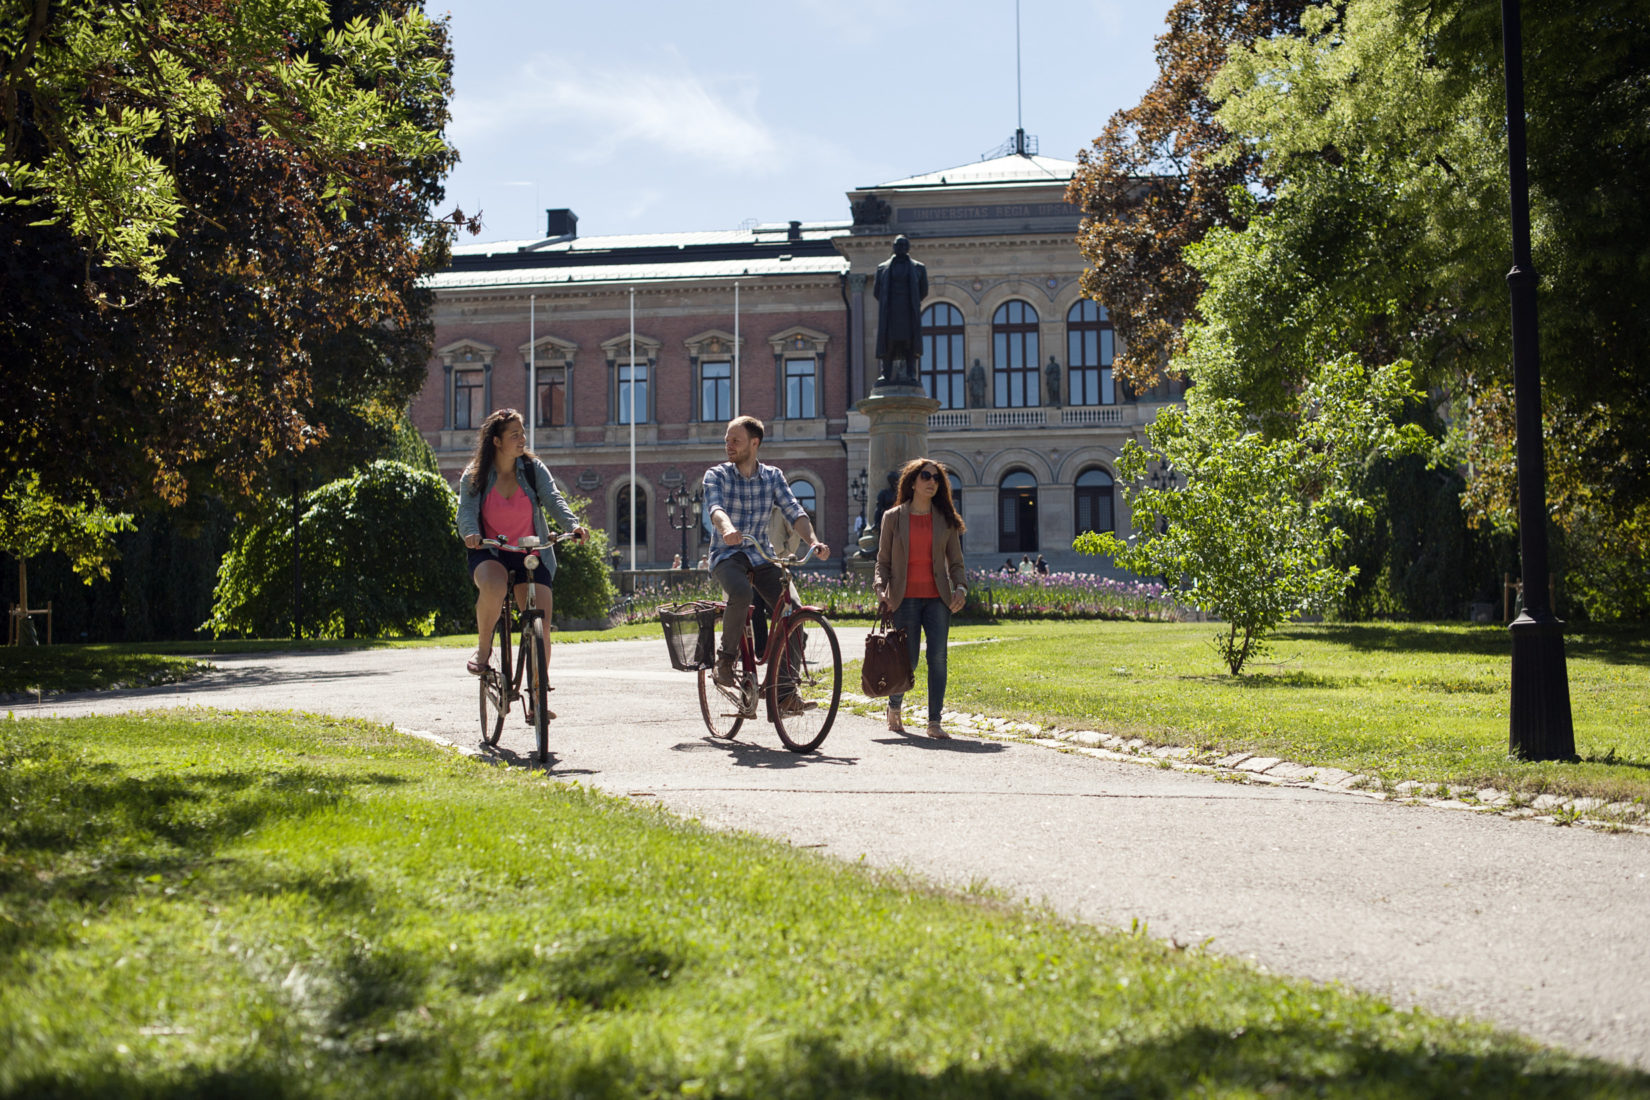 Students on bikes